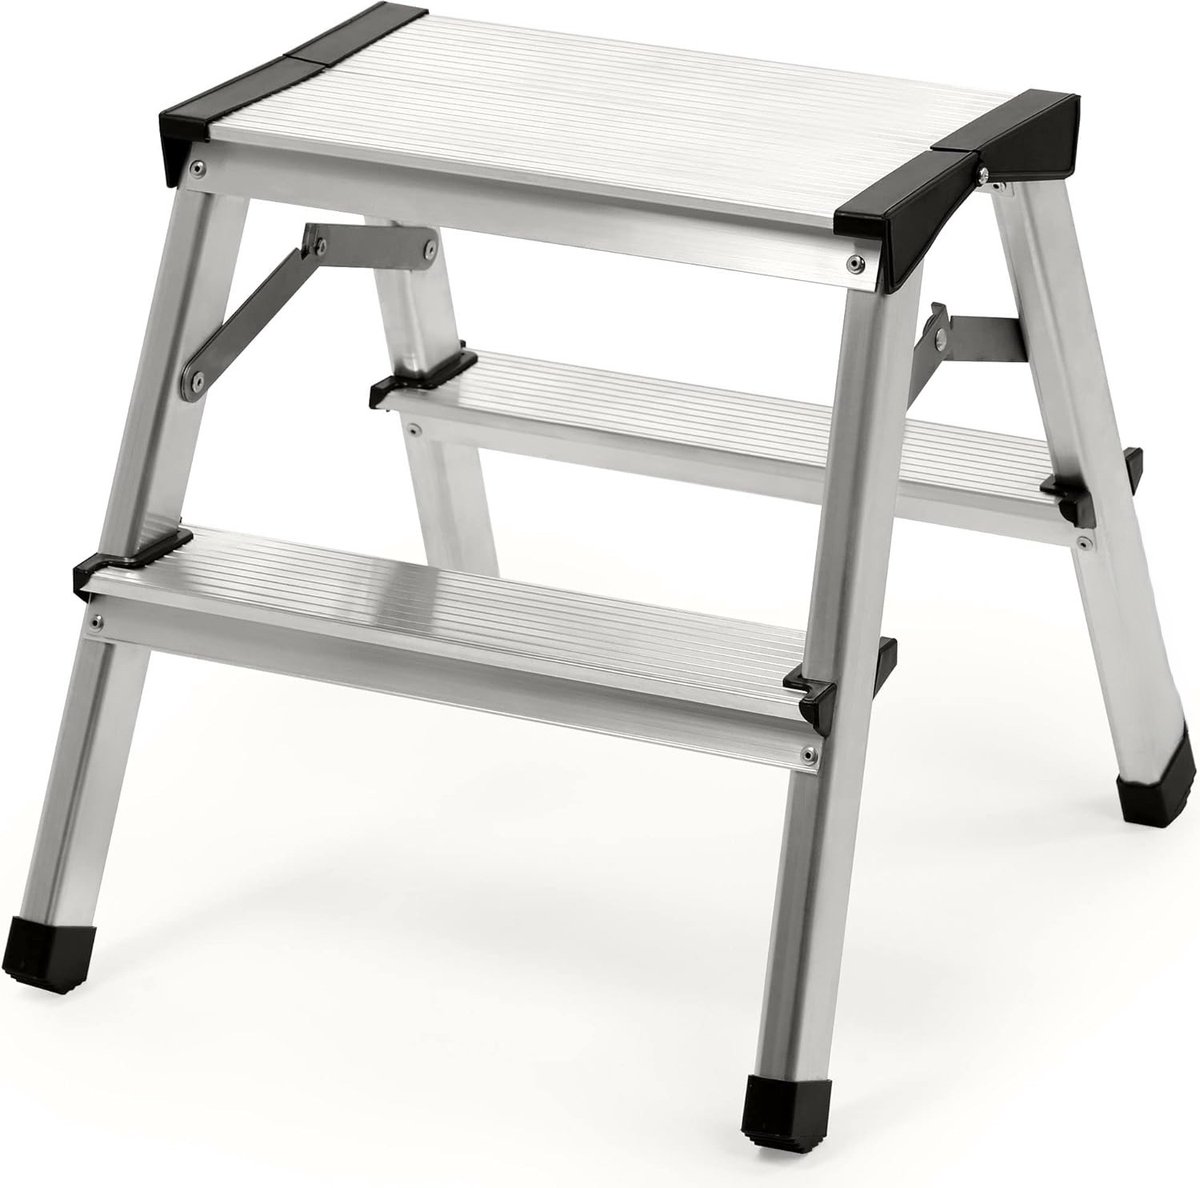 Trapladder van aluminium, 2 treden, vouwtrap tot 125 kg, trapladder met antislipniveaus, staande ladder, aluminium ladder, opstapkruk, vouwladder